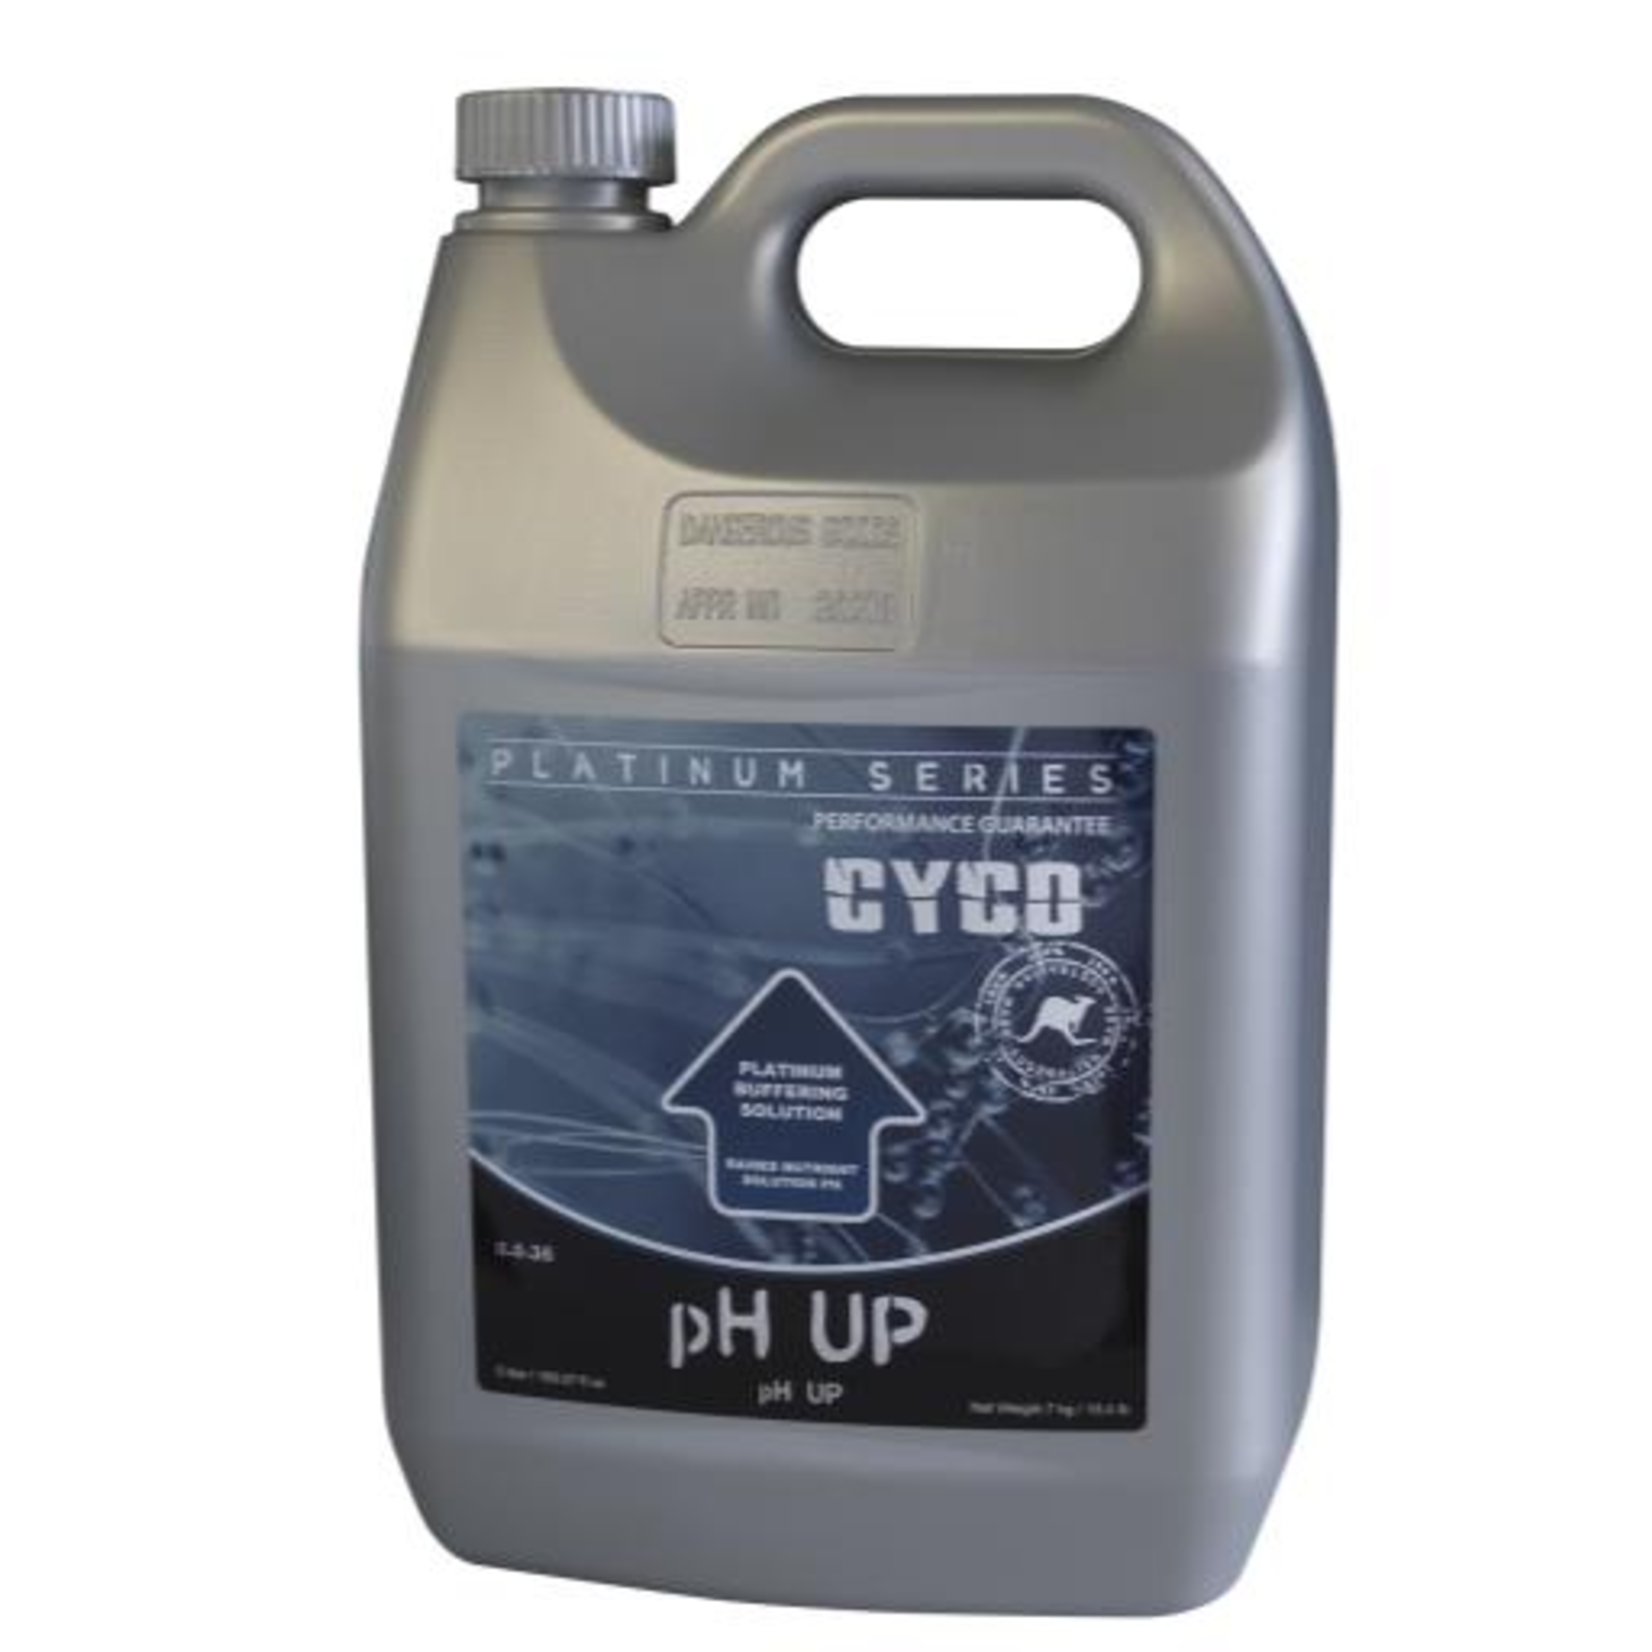 CYCO pH Up 5 Liter